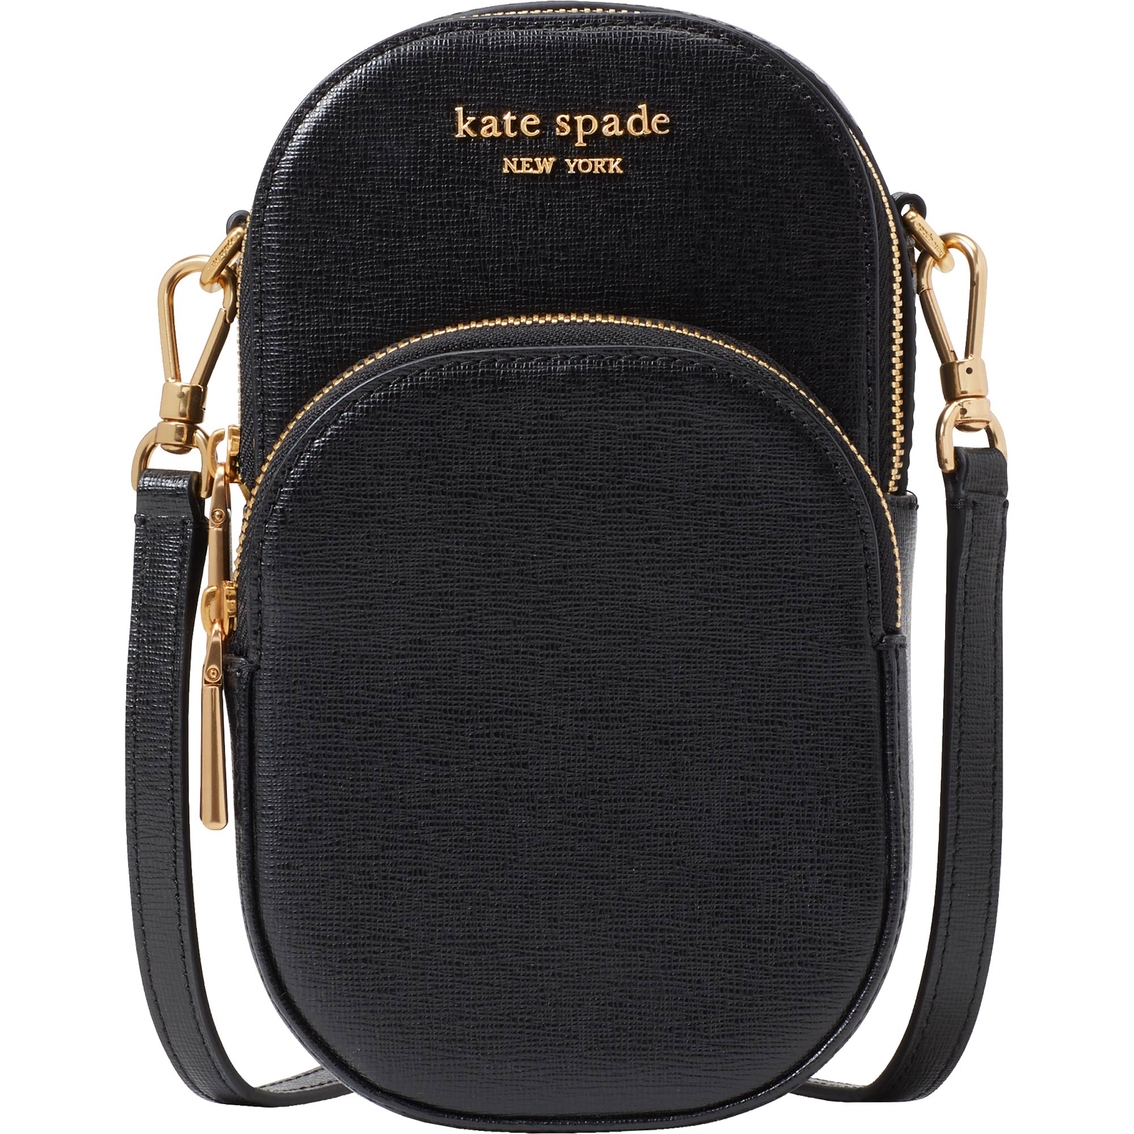 Kate Spade New York Morgan Saffiano Leather Crossbody Bag